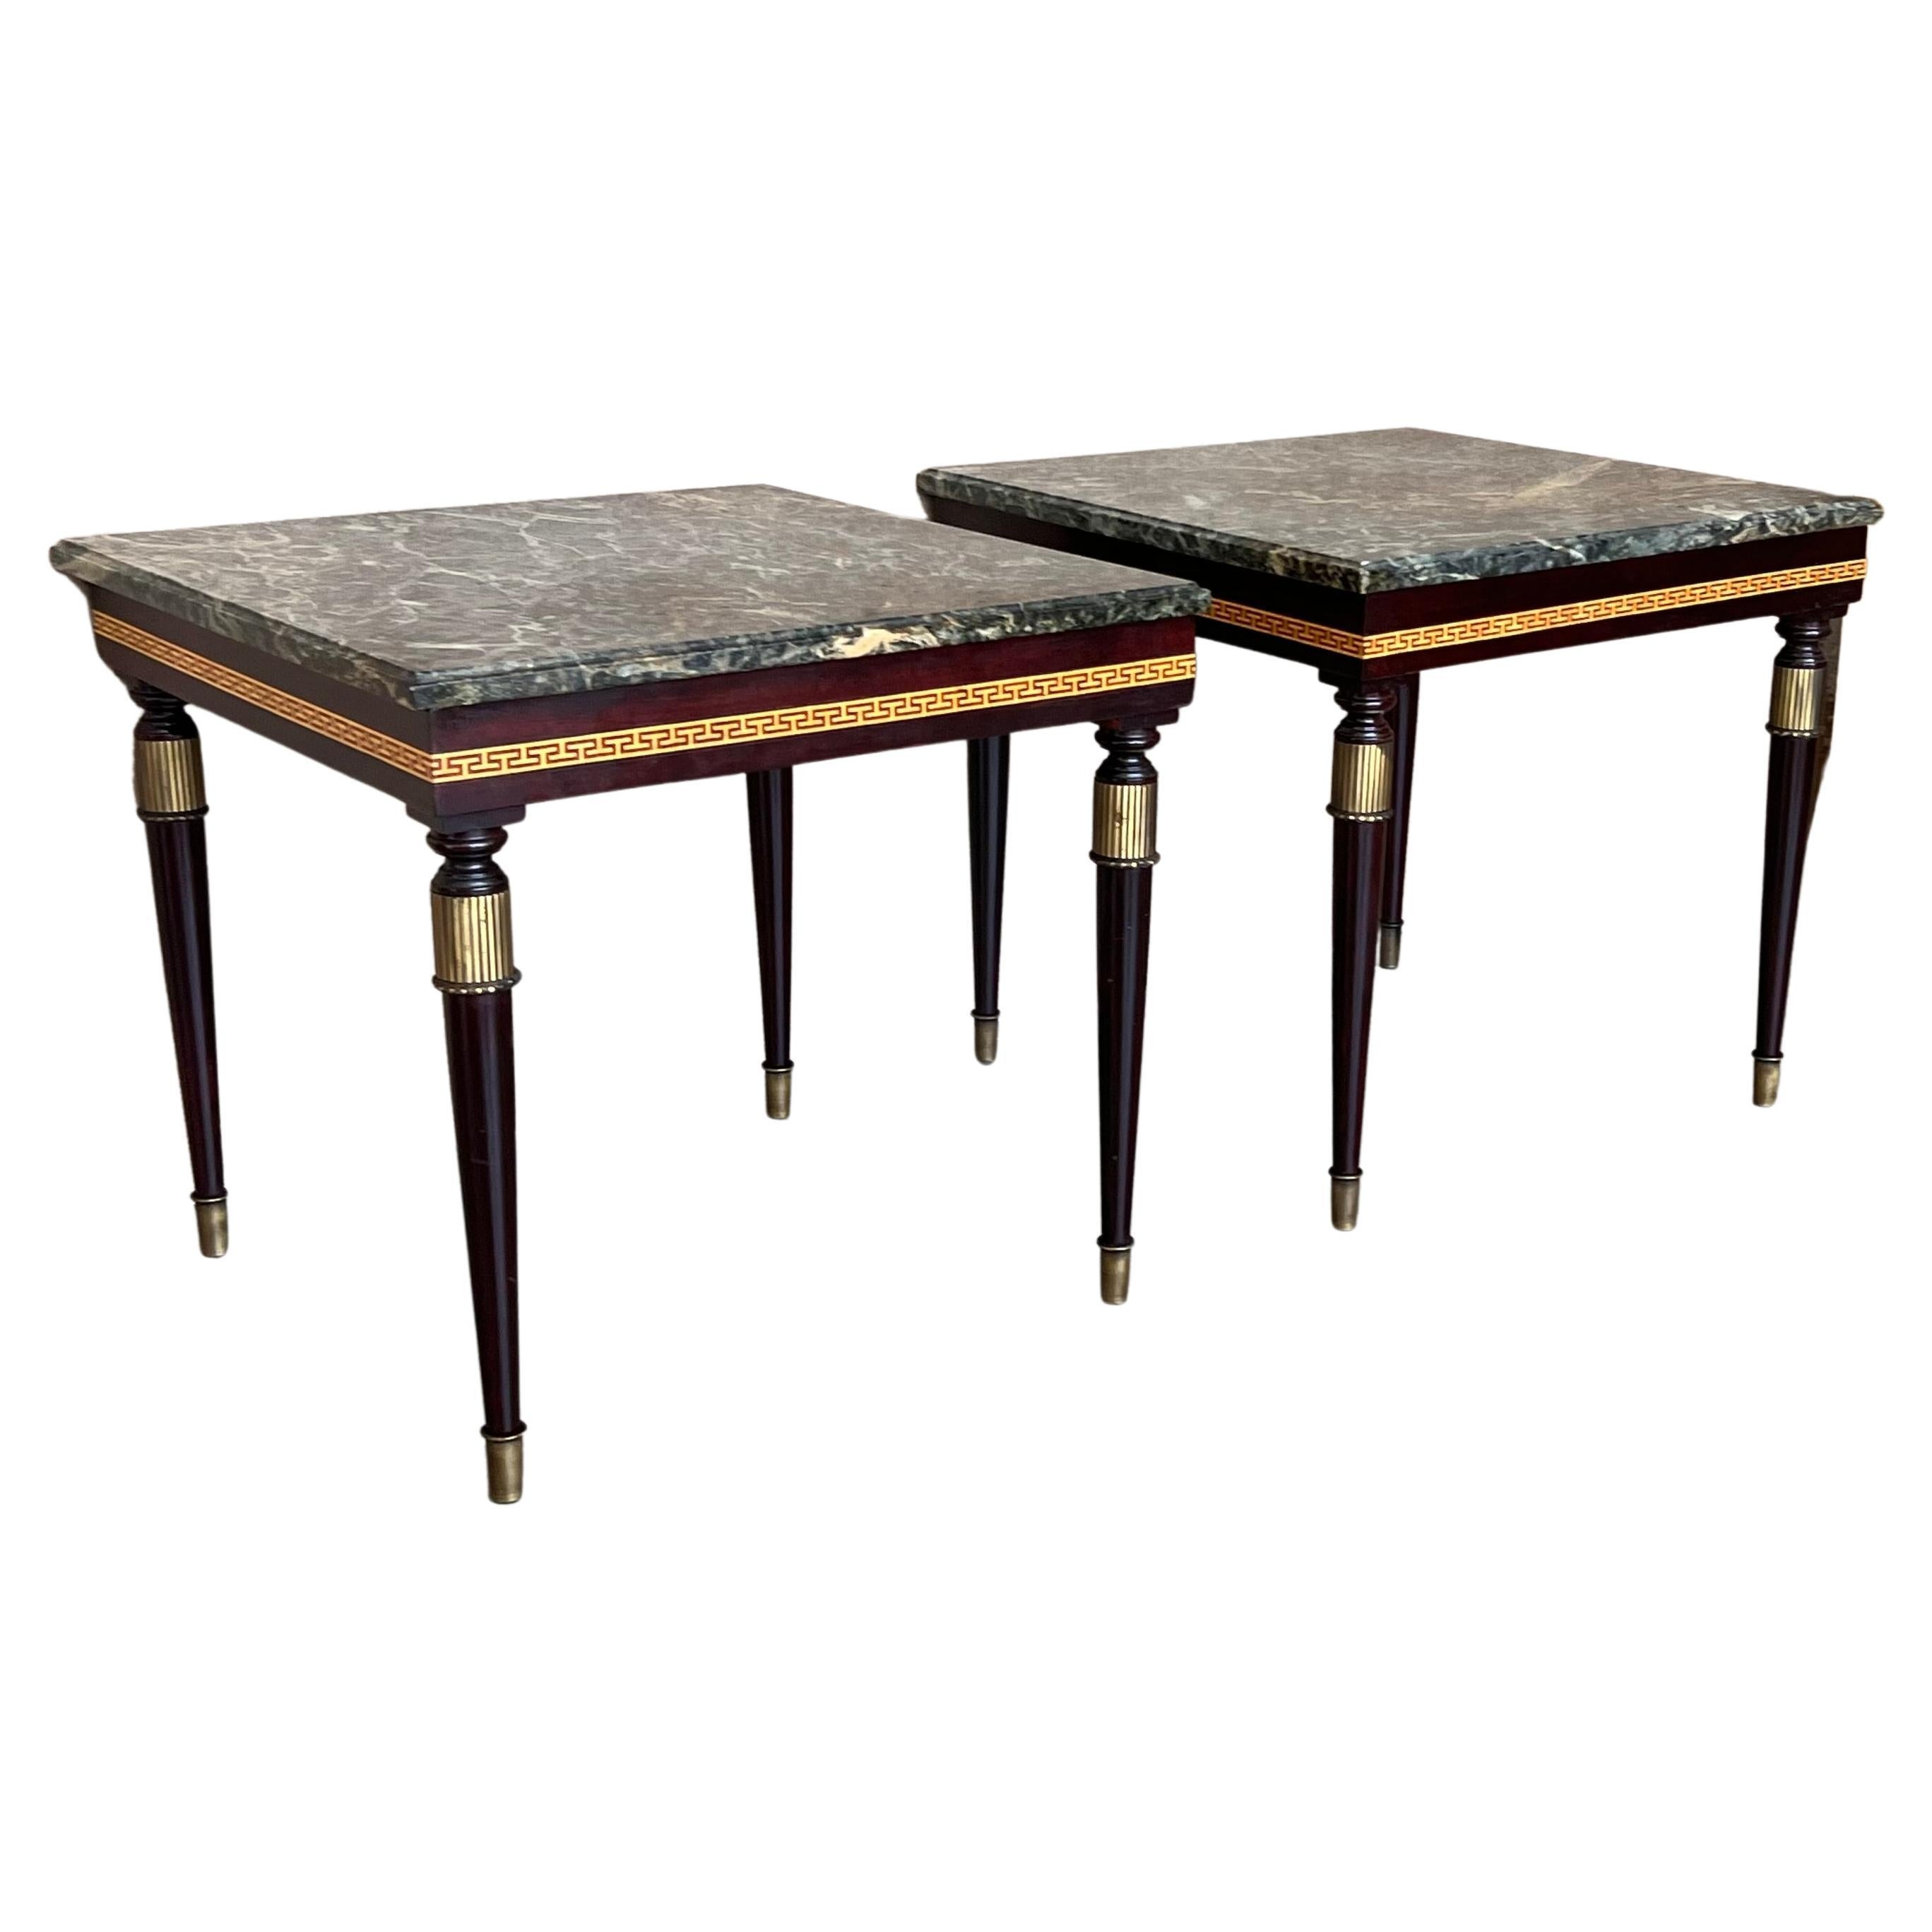 Juego de dos mesas de centro de caoba francesa y tapa de mármol con soportes de bronce